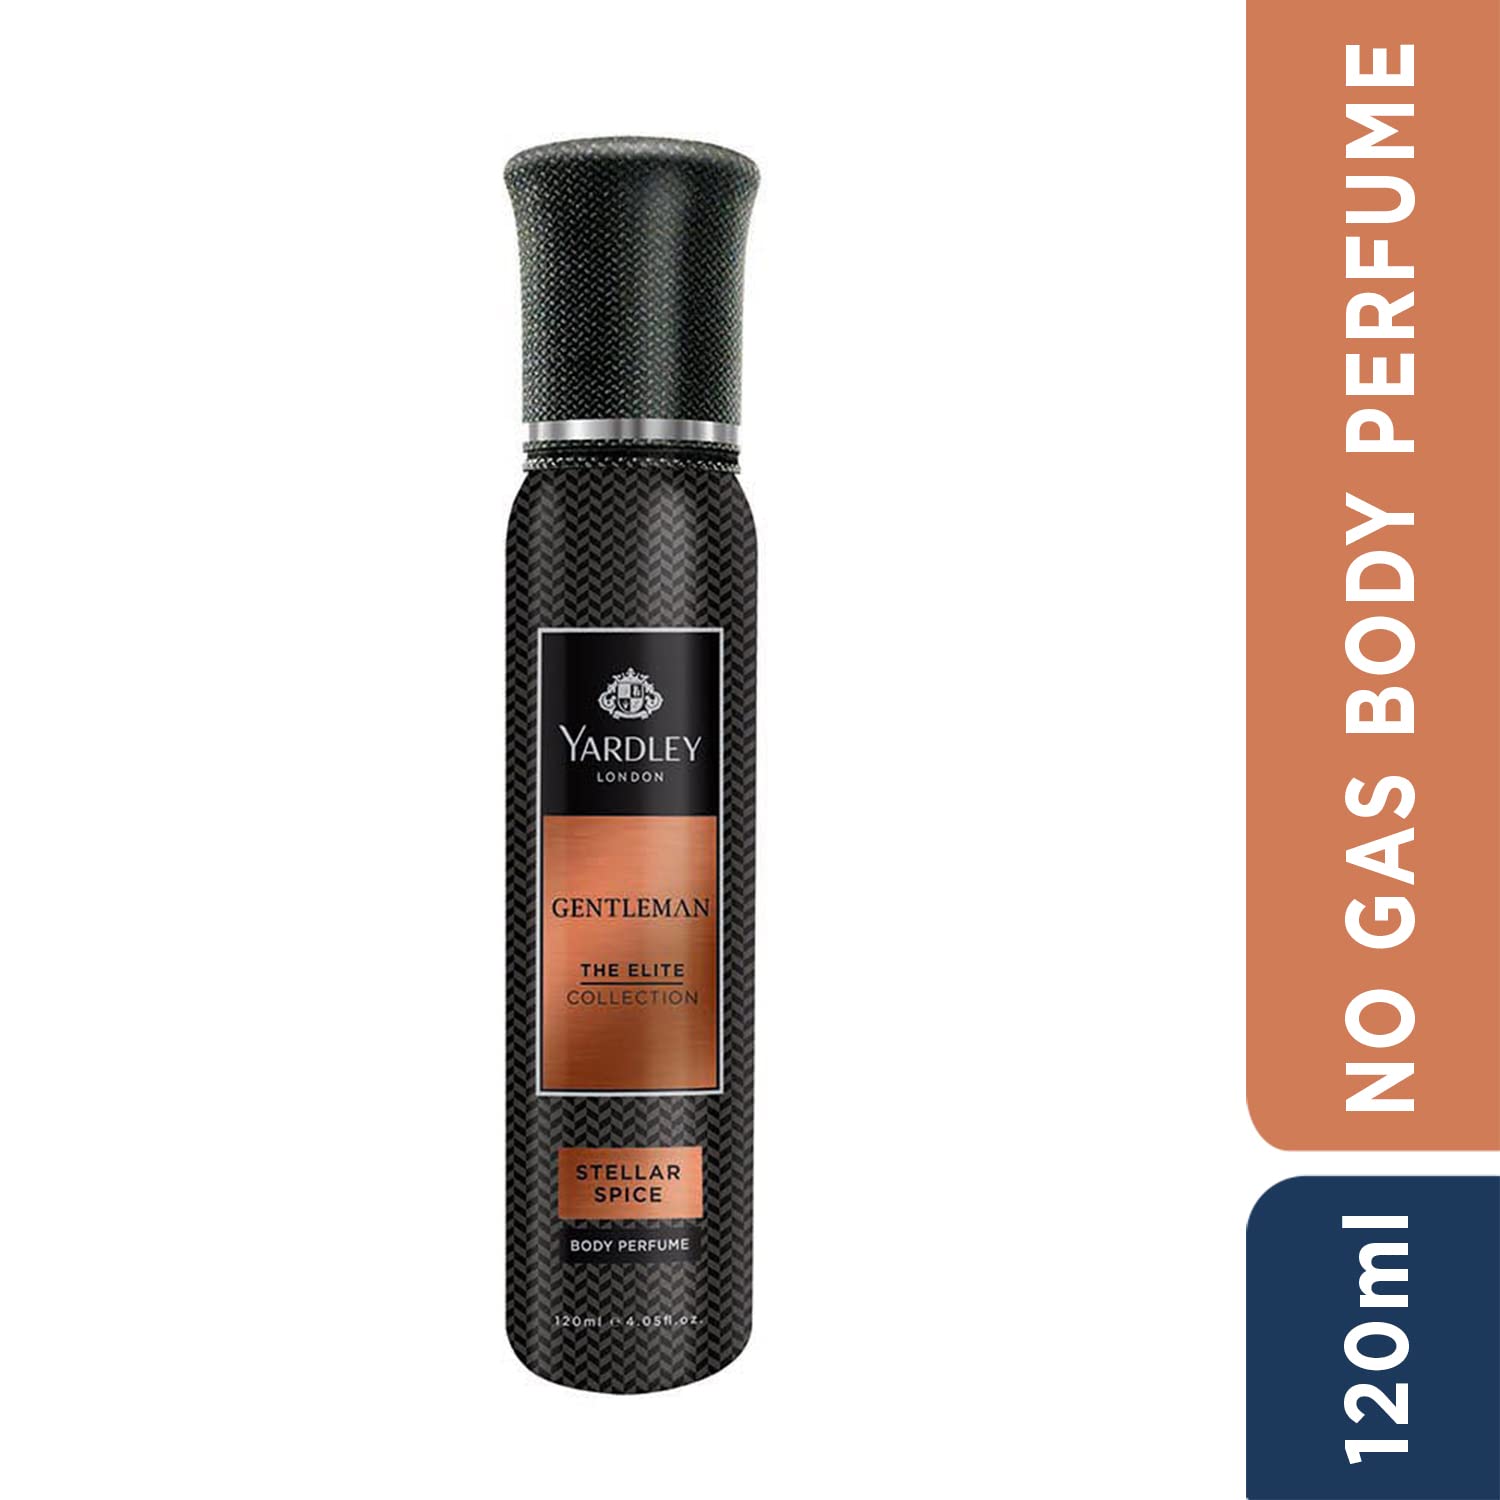 Yardley London Gentleman Stellar Spice Body Perfume| The Elite Collection| No Gas Deodorant For Men| Men’s Body Perfume| 120ml